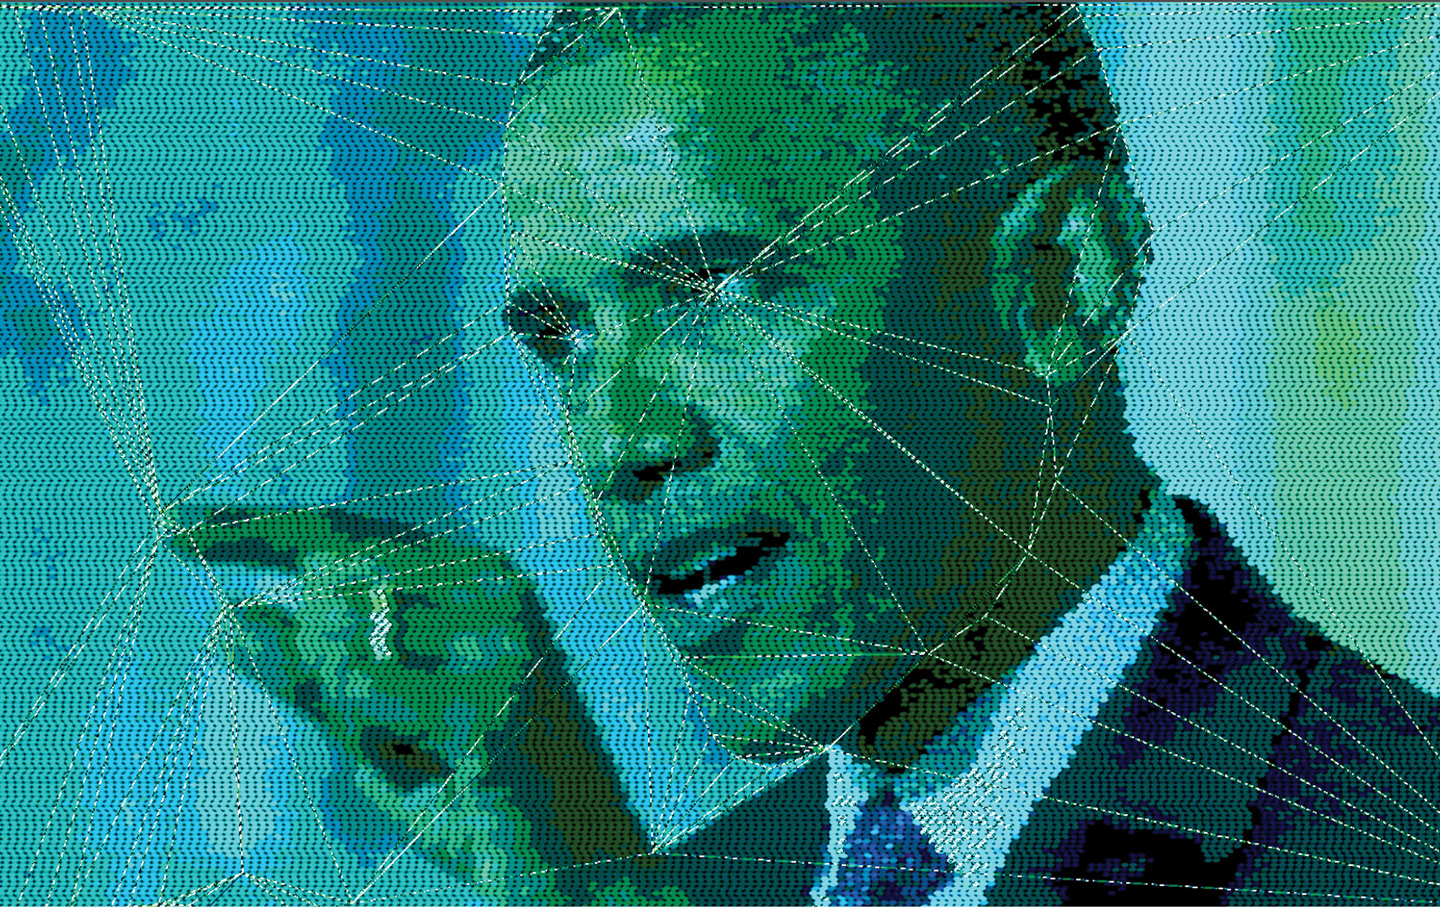 Was Obama Silicon Valley’s President?